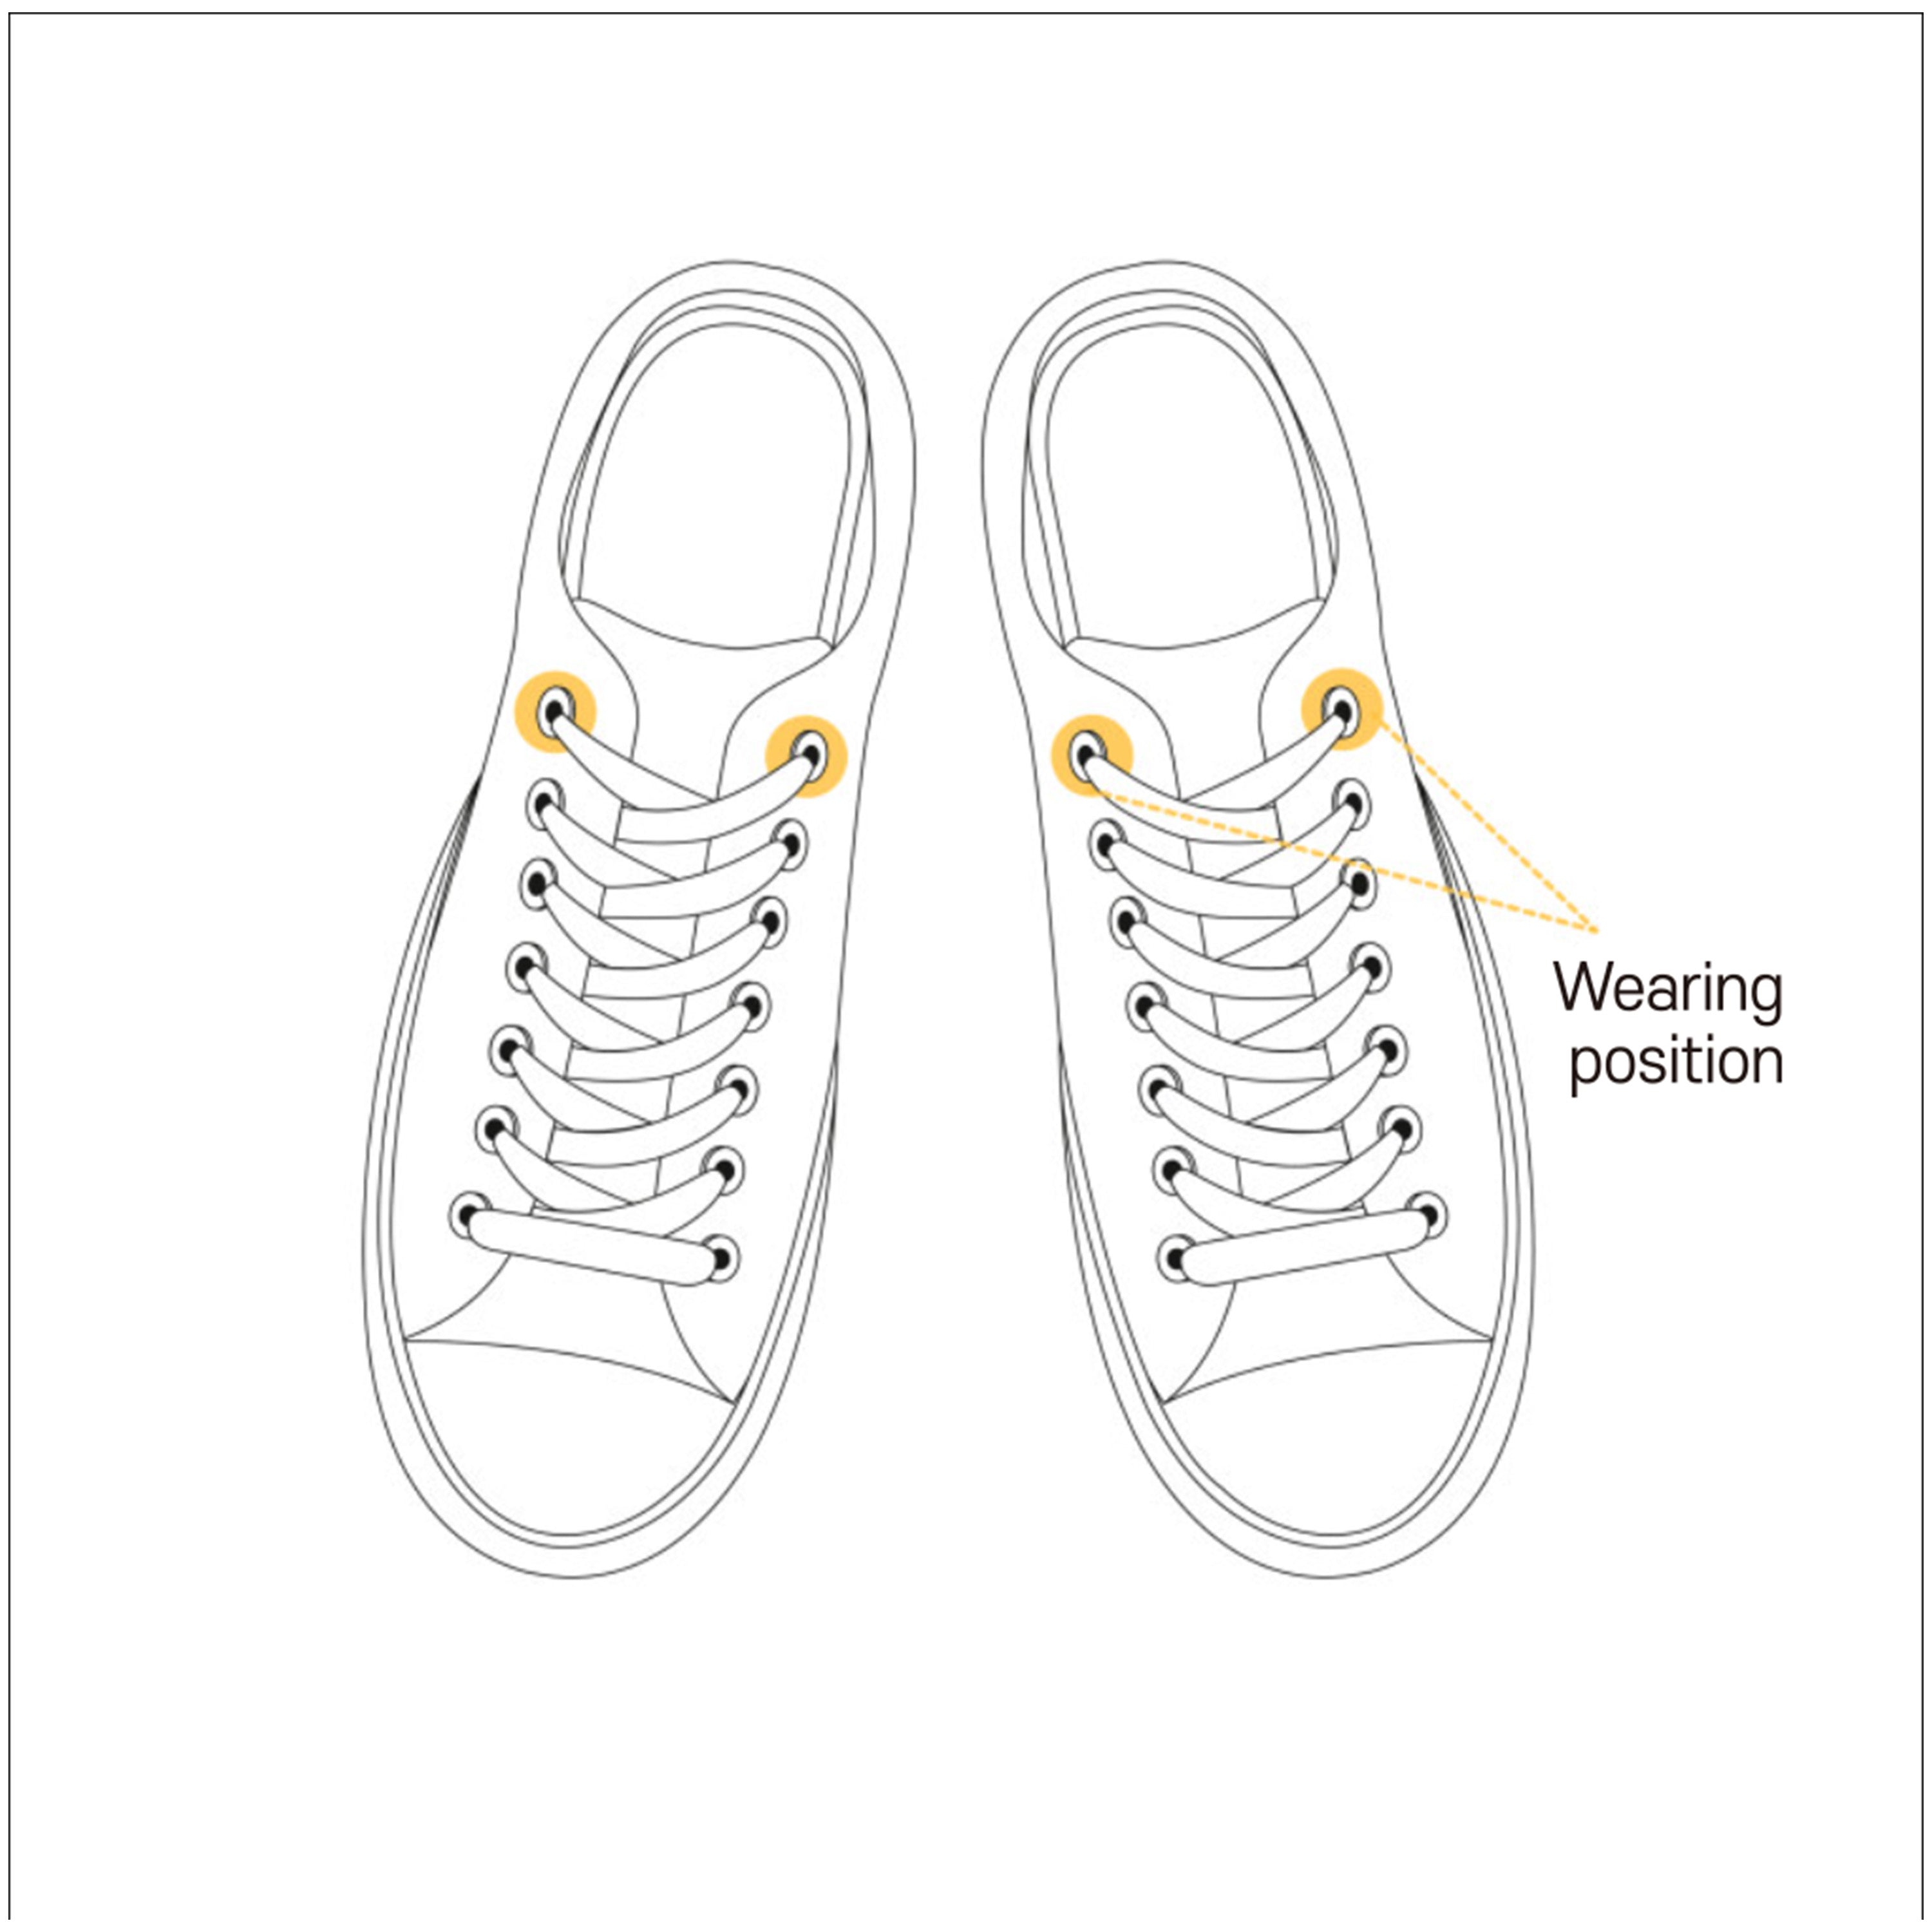 12 PCS Silicone No Tie Shoelace Anchors - Lace Lock Clip, Fit All Shoelace (3 sets)